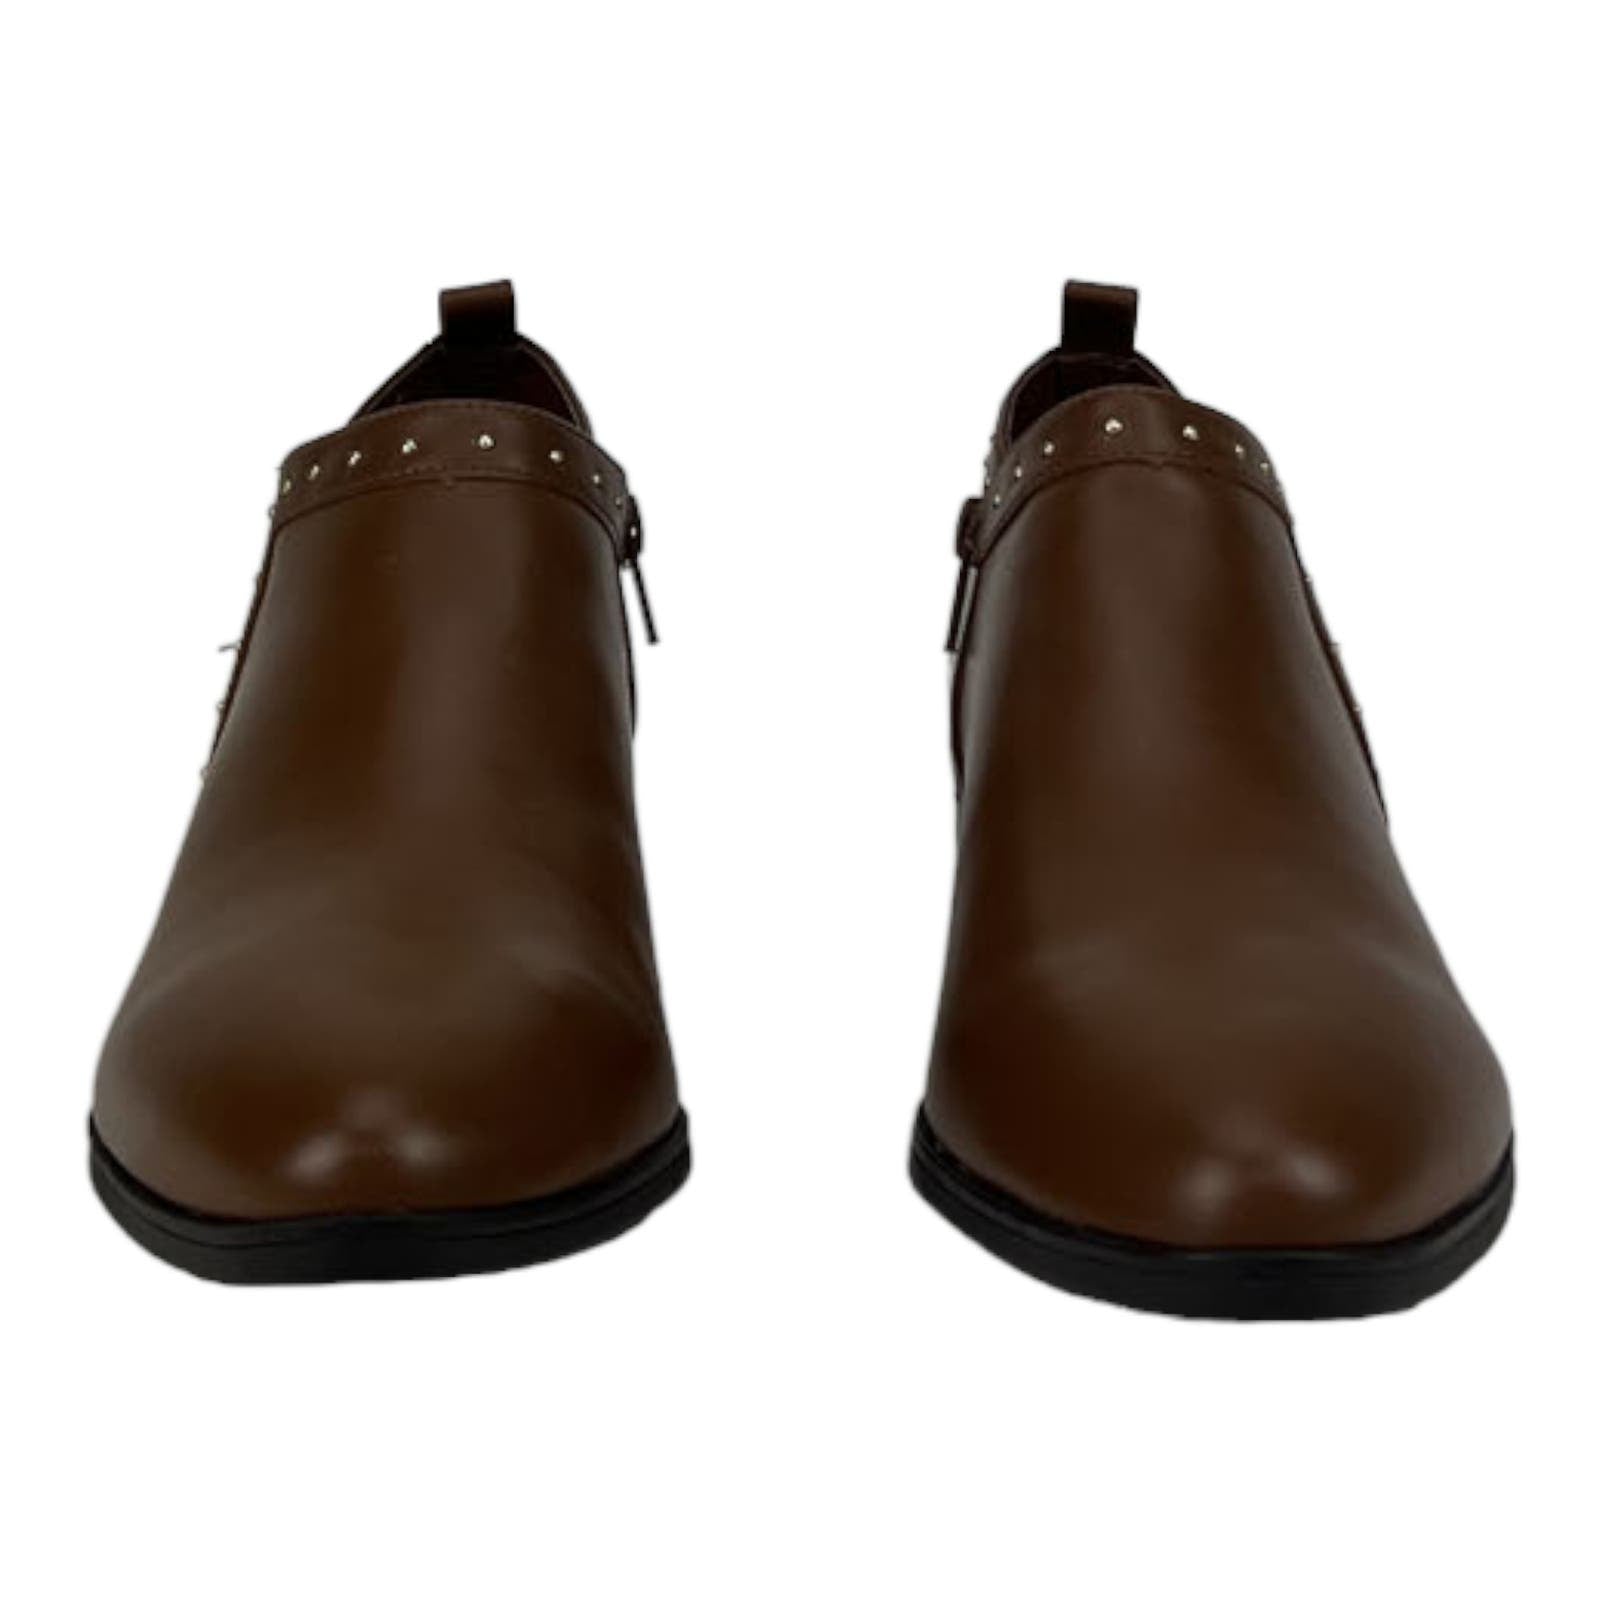 Bella Vita Women US 6.5 Dark Tan Brown Leather Ankle Boot Shoes